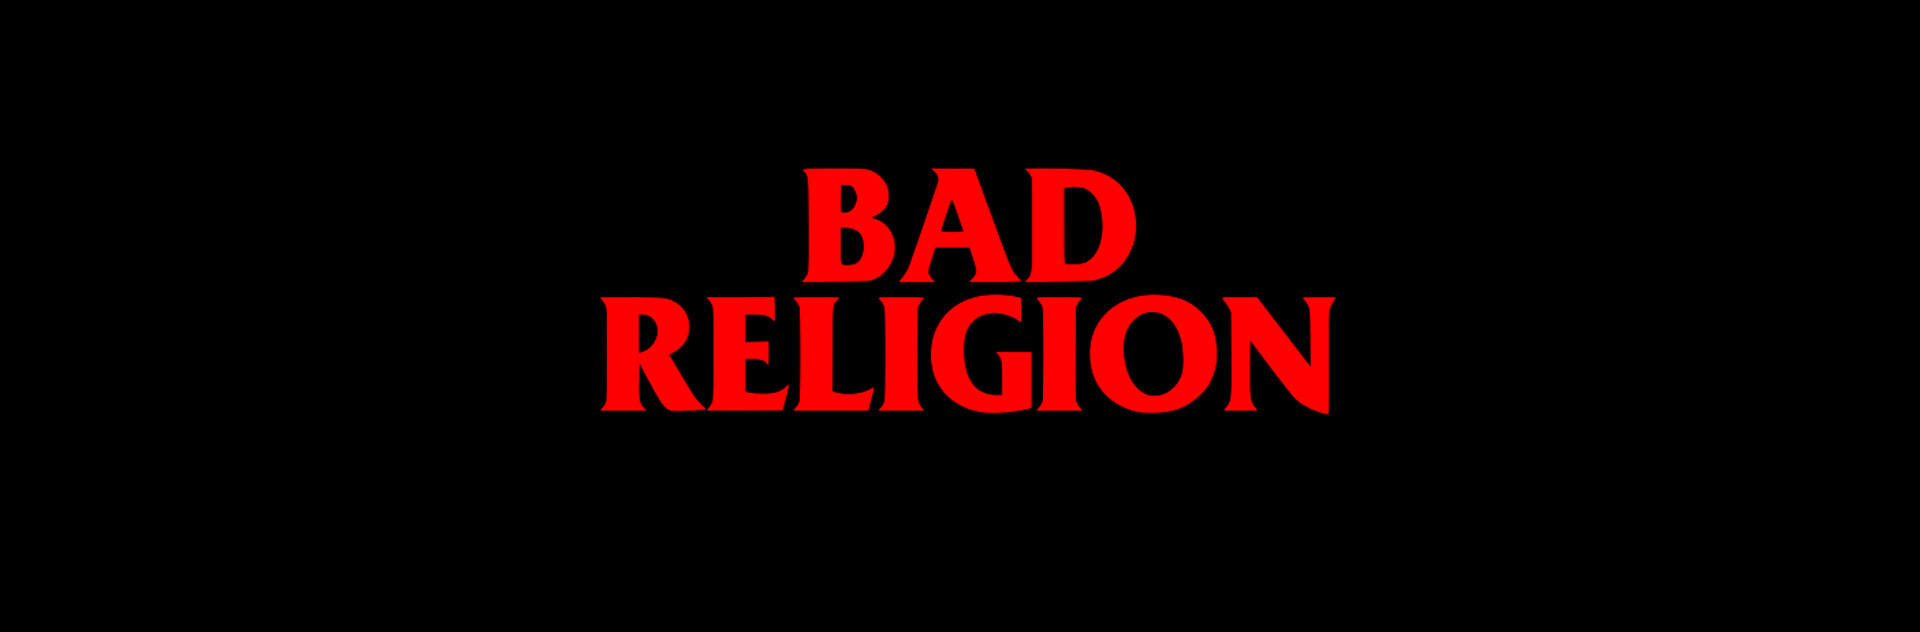 bad religion wallpaper,text,font,black,red,logo